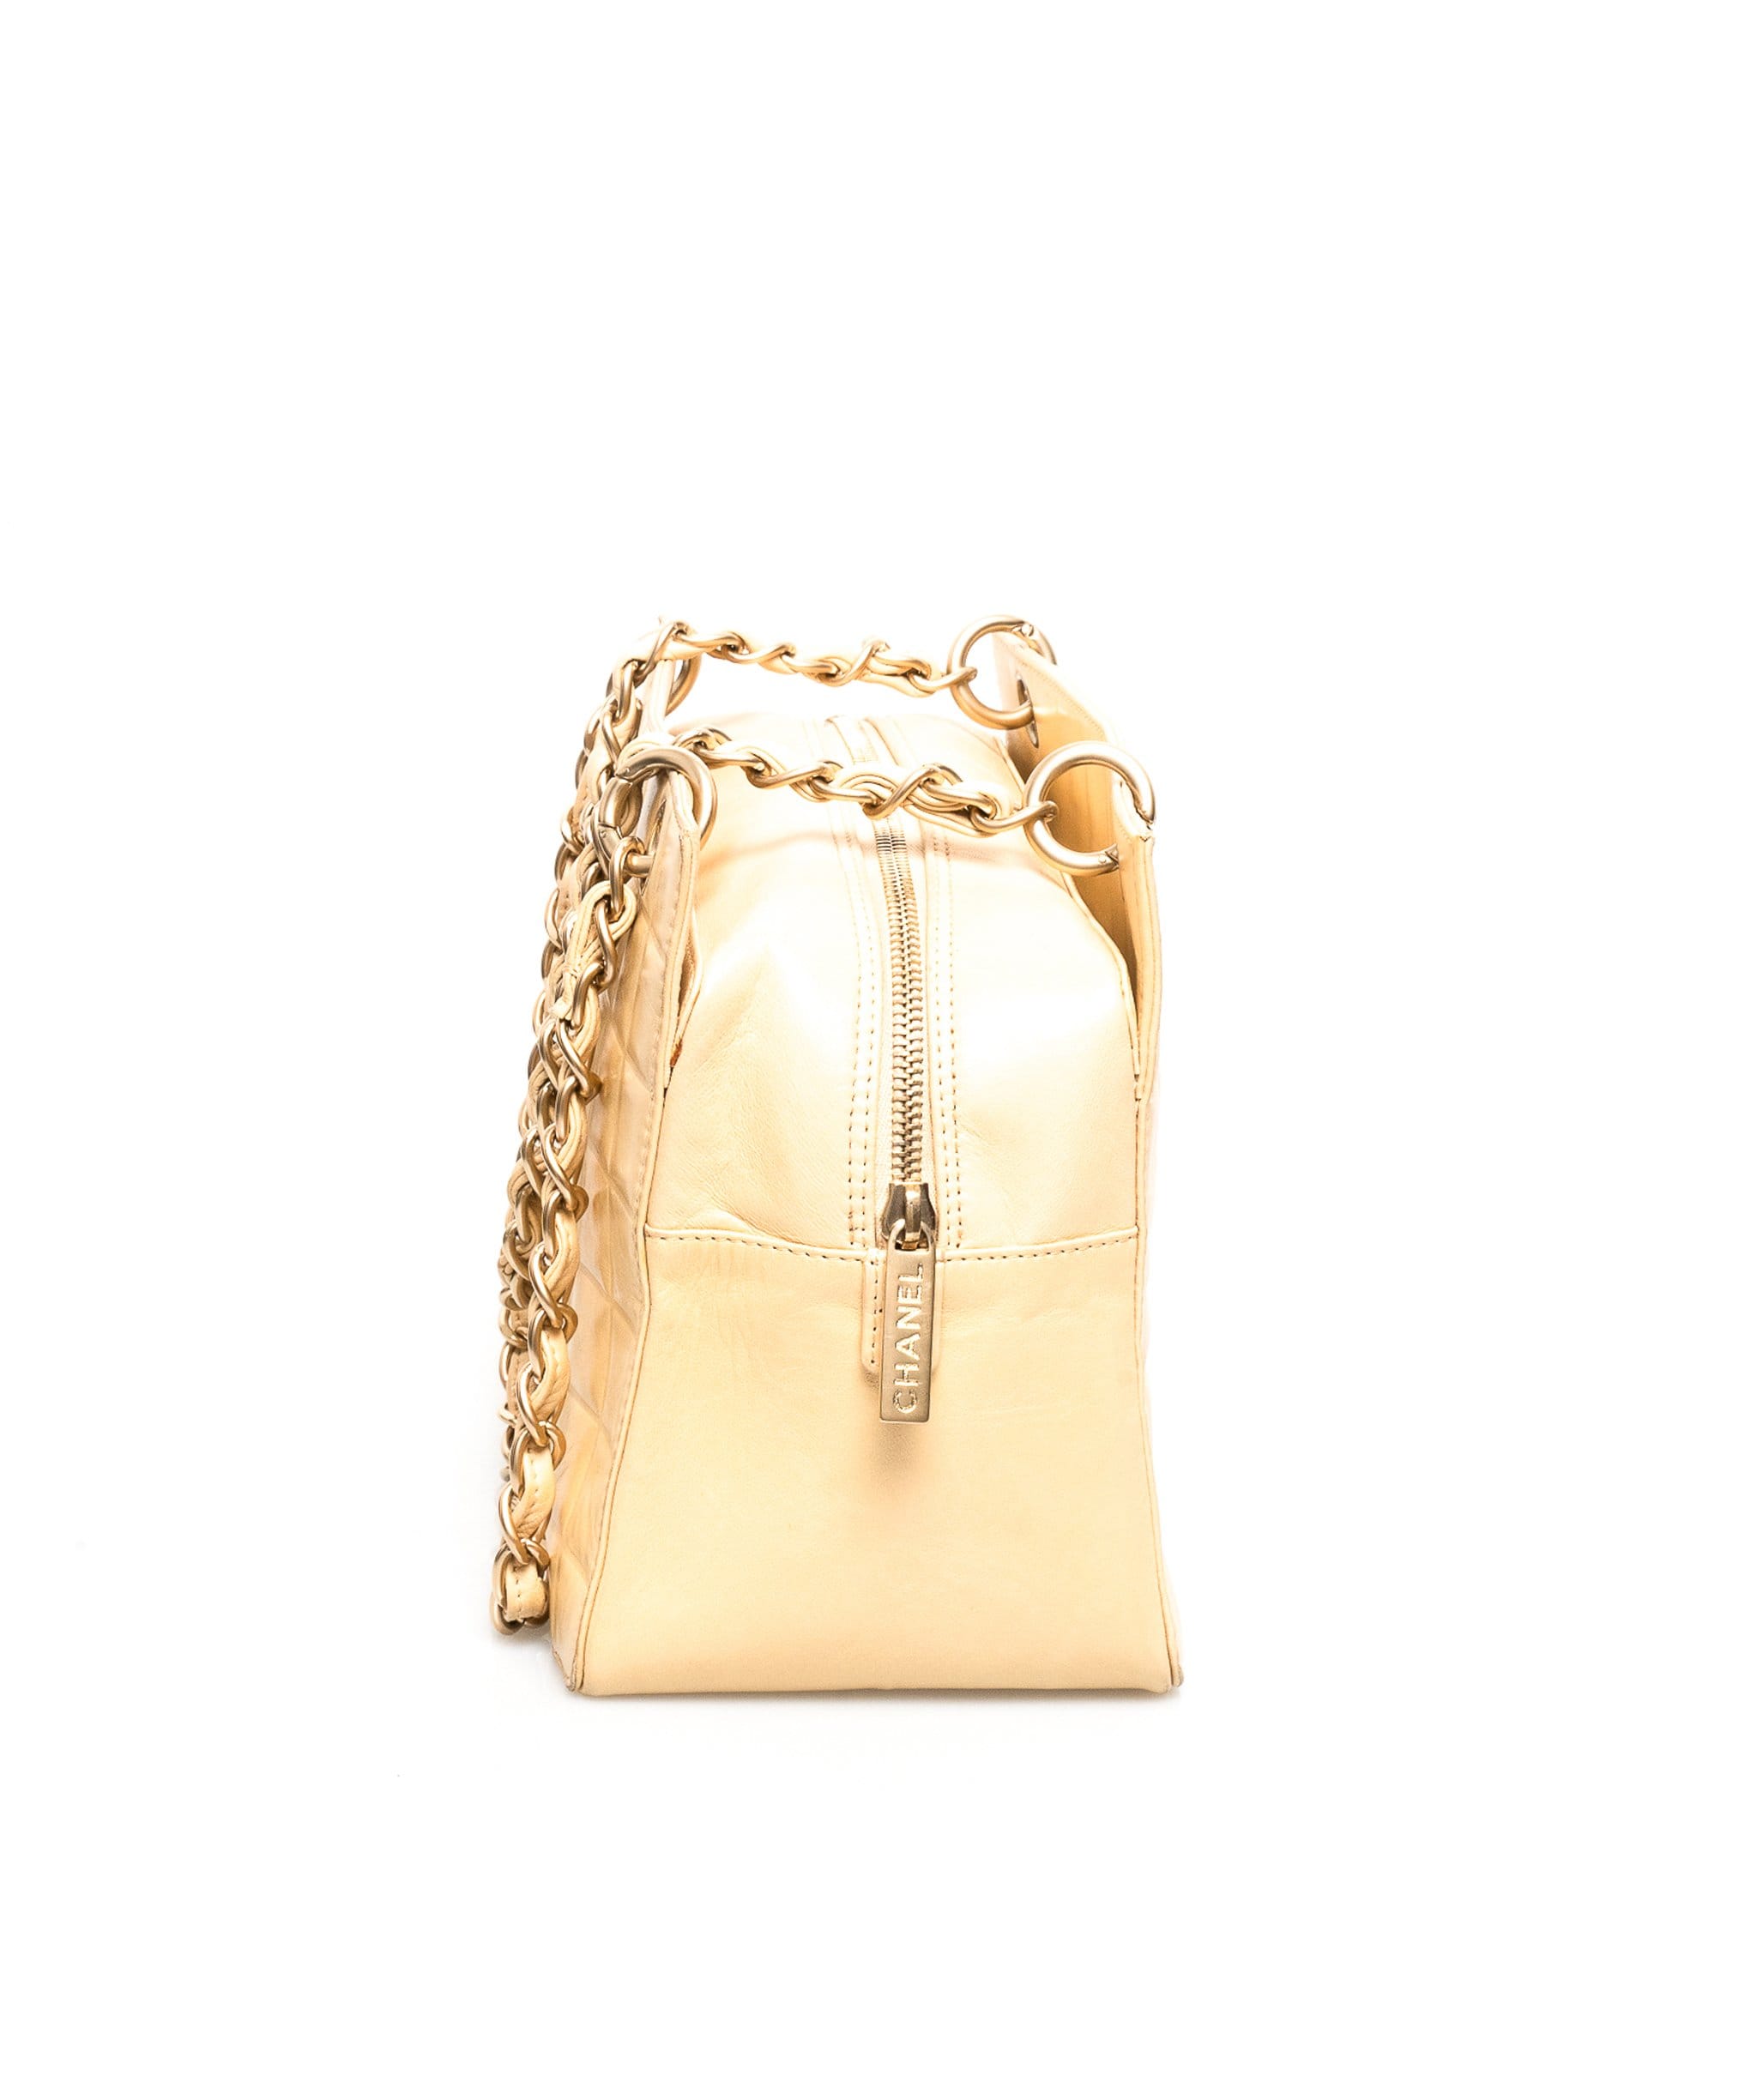 Chanel Chanel Timeless Beige PST Bag - AWL1723